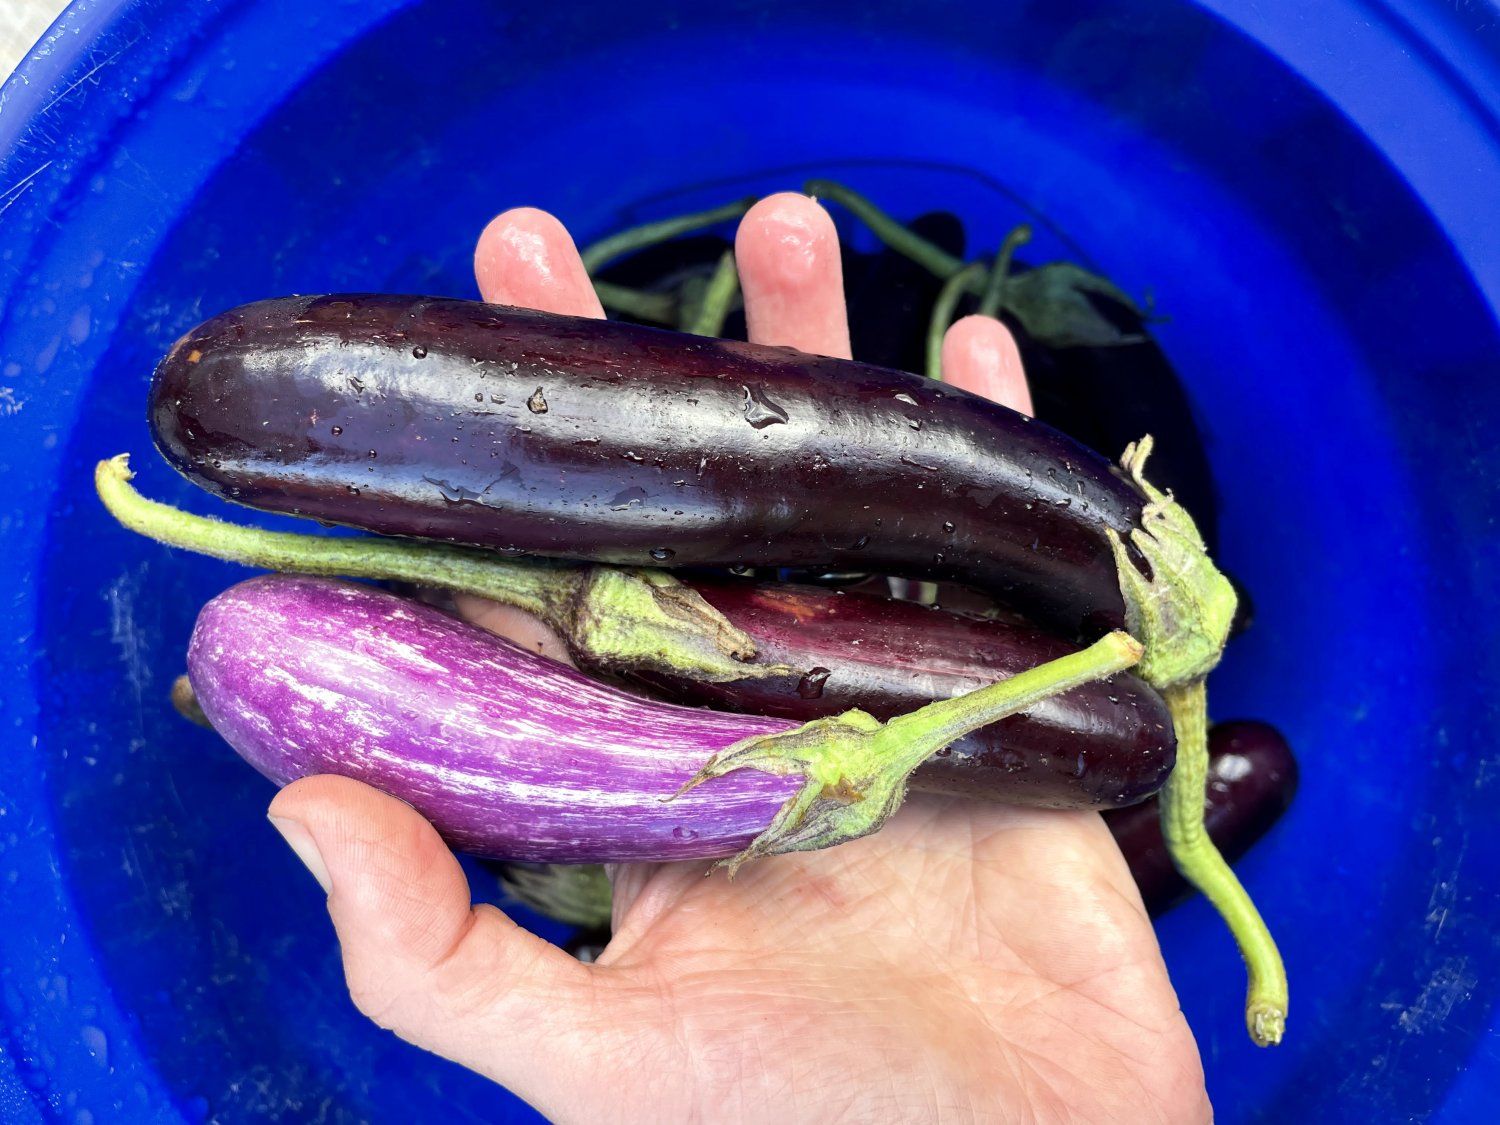 Previous Happening: Eggplants R Us